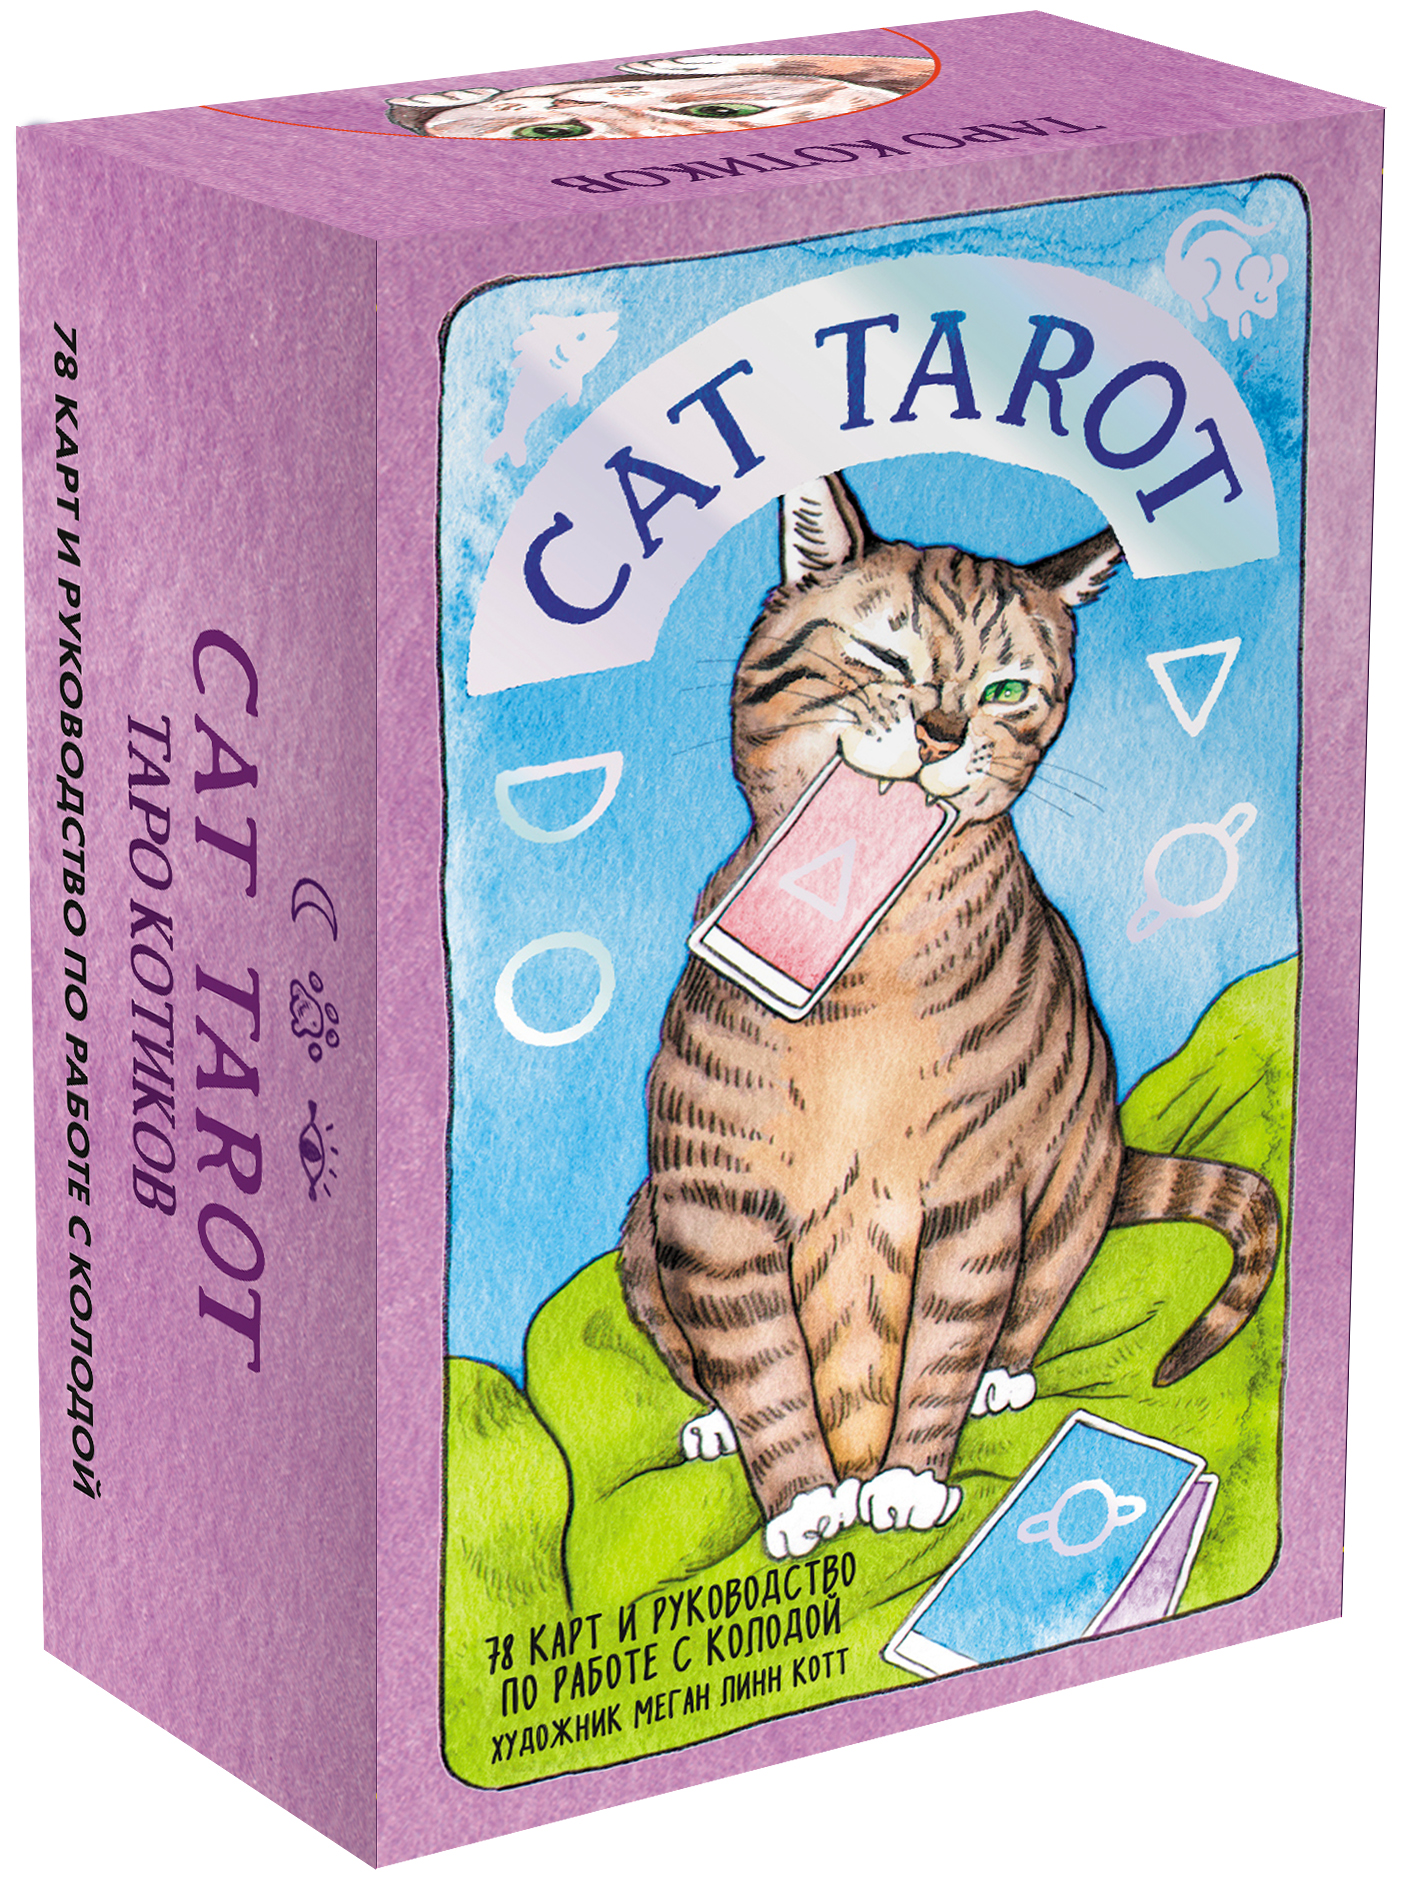 Cat Tarot: Таро Котиков (78 карт и руководство в подарочном футляре)